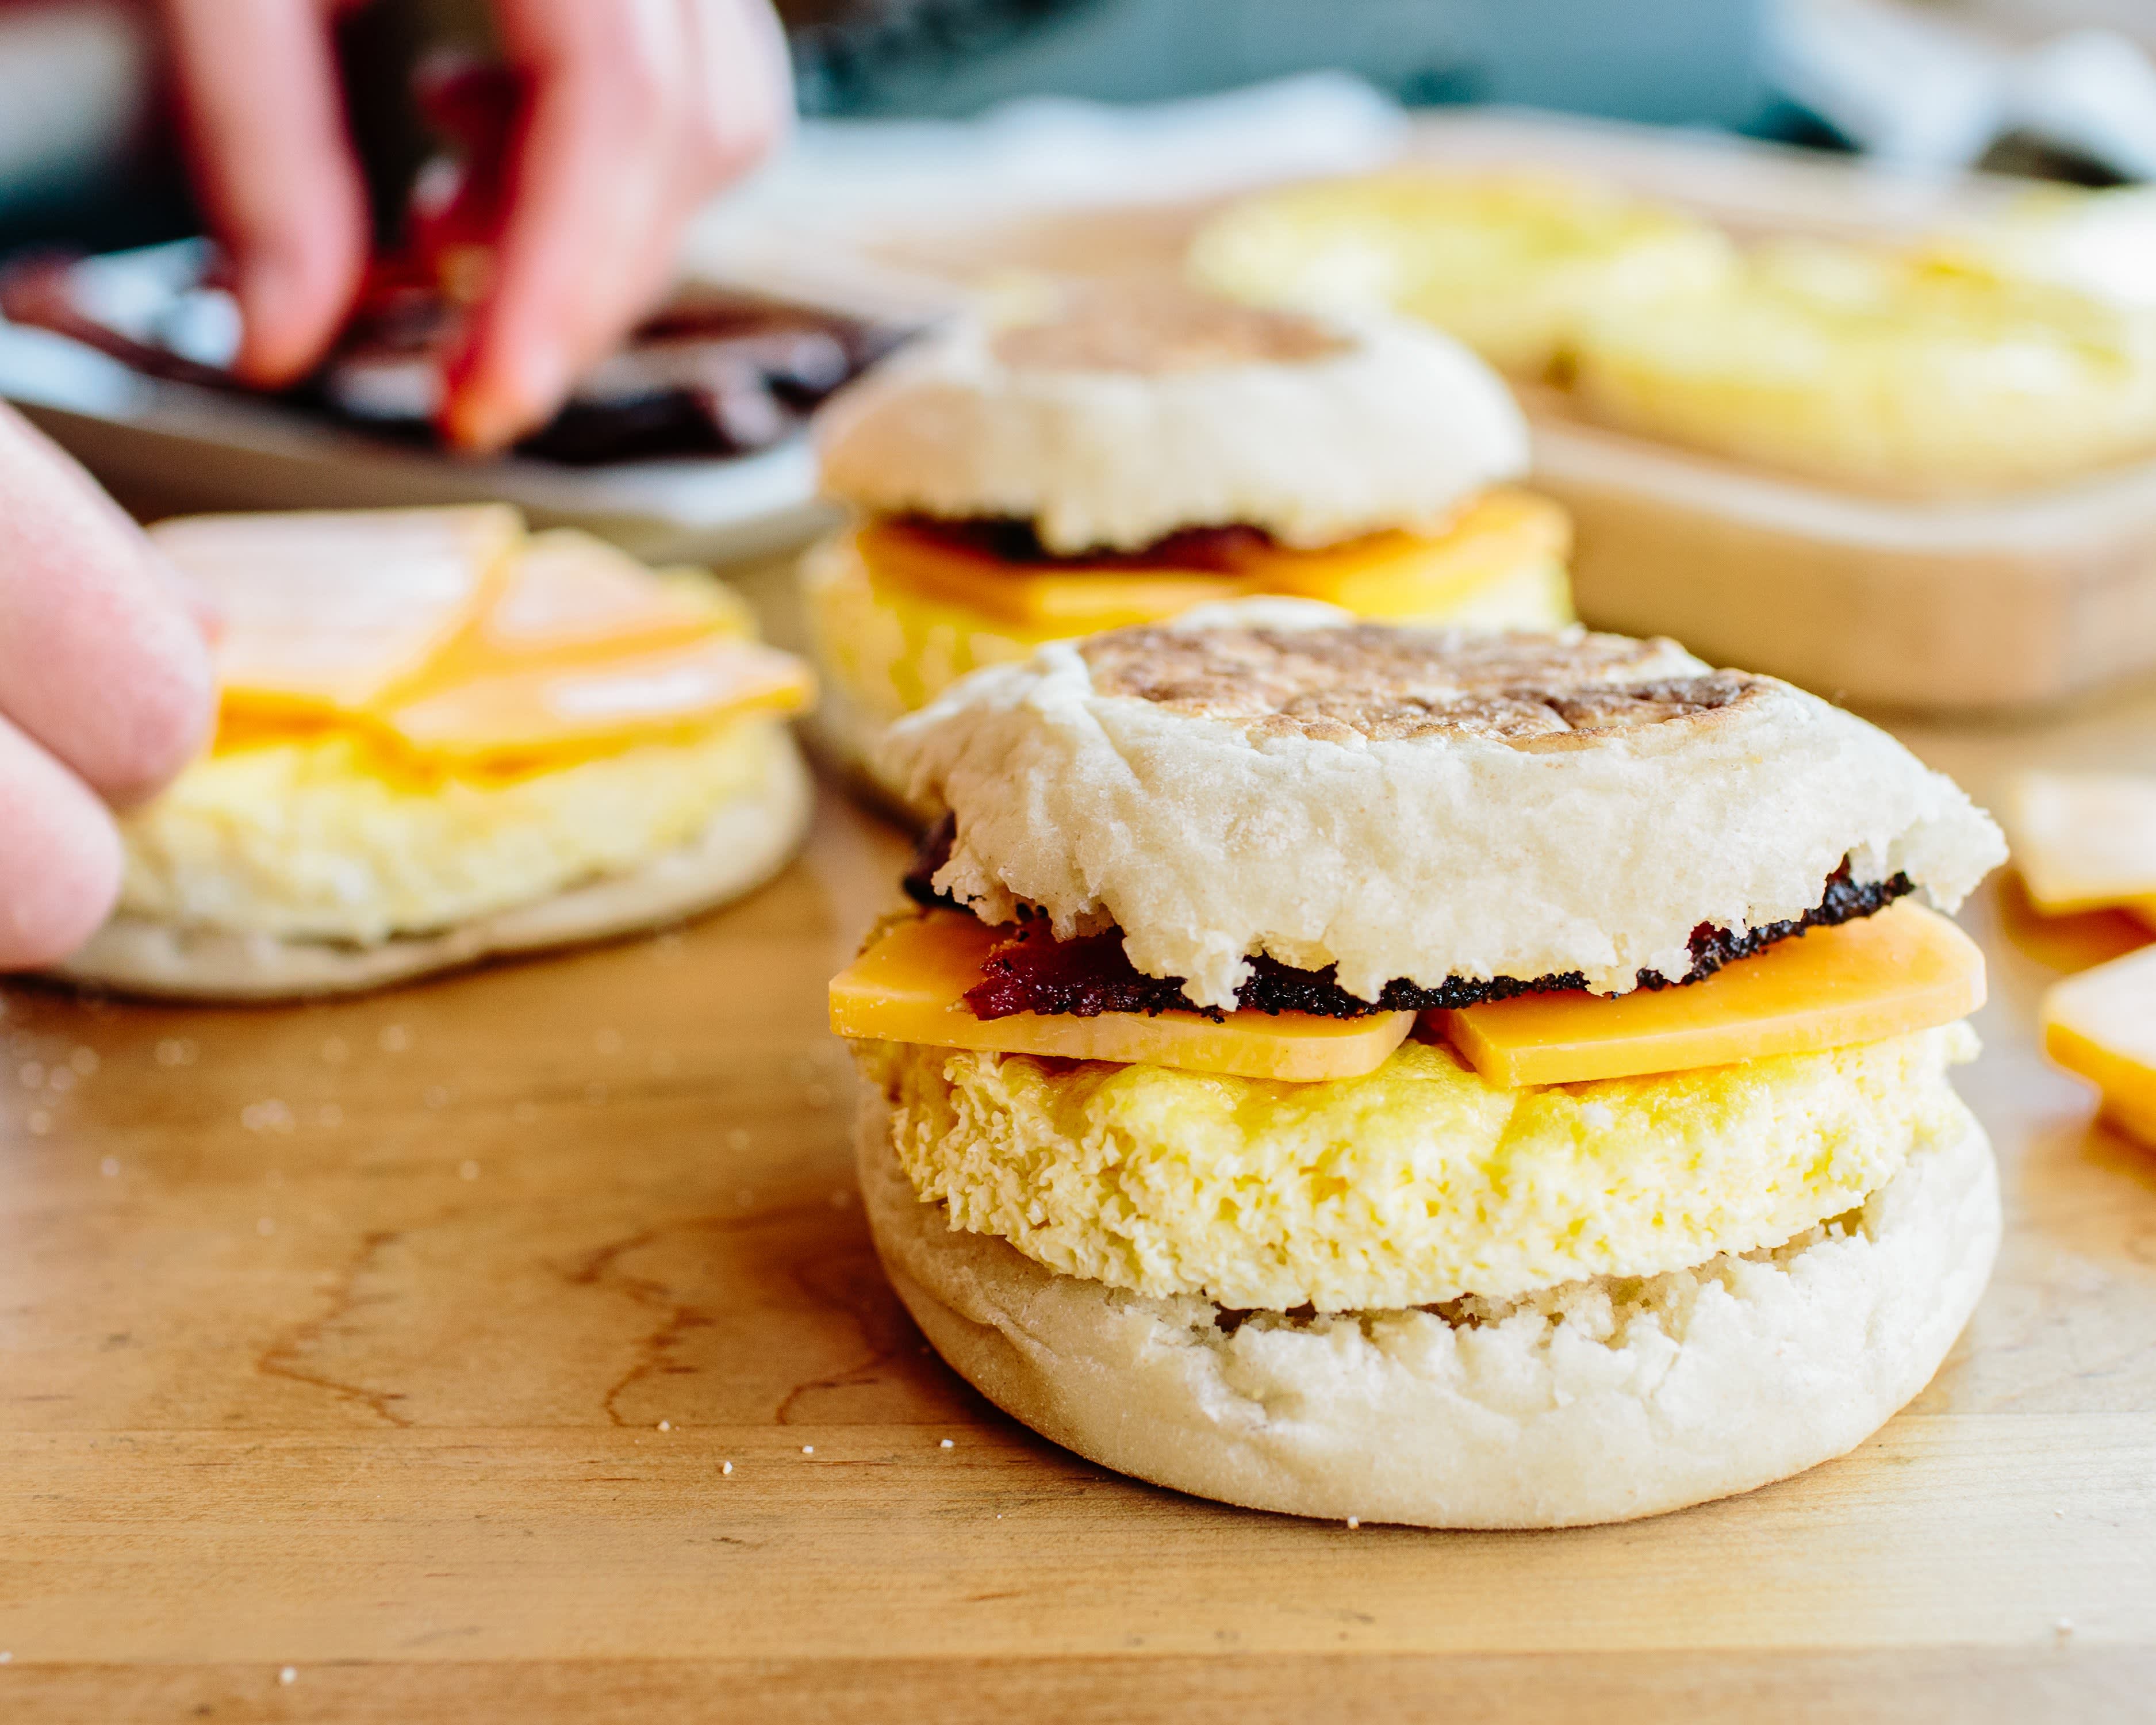 How To Make Freezer-Friendly Breakfast Sandwiches